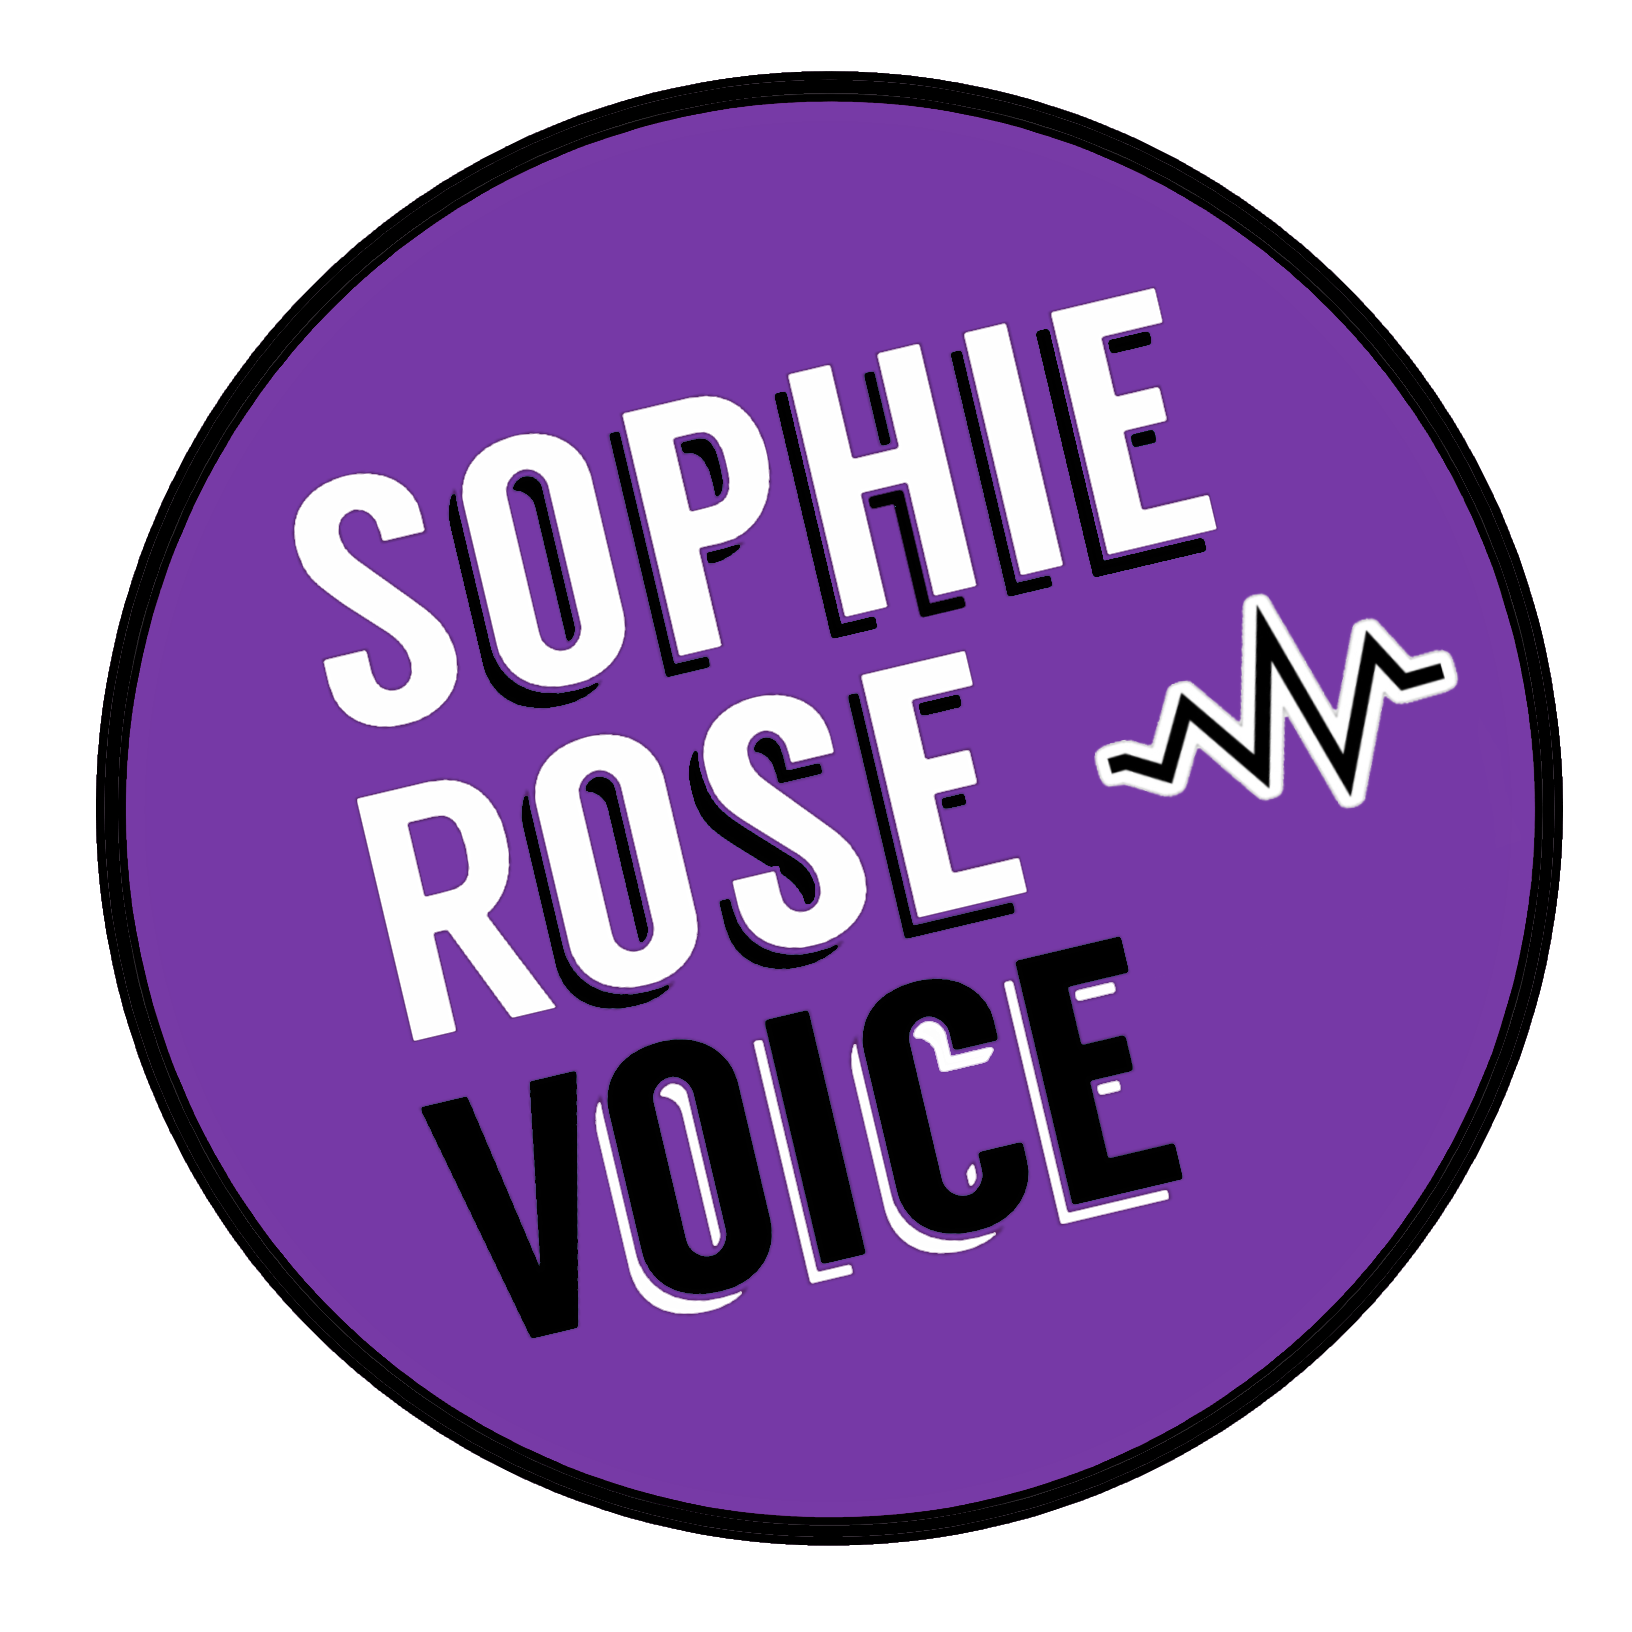 Sophie Rose Voice